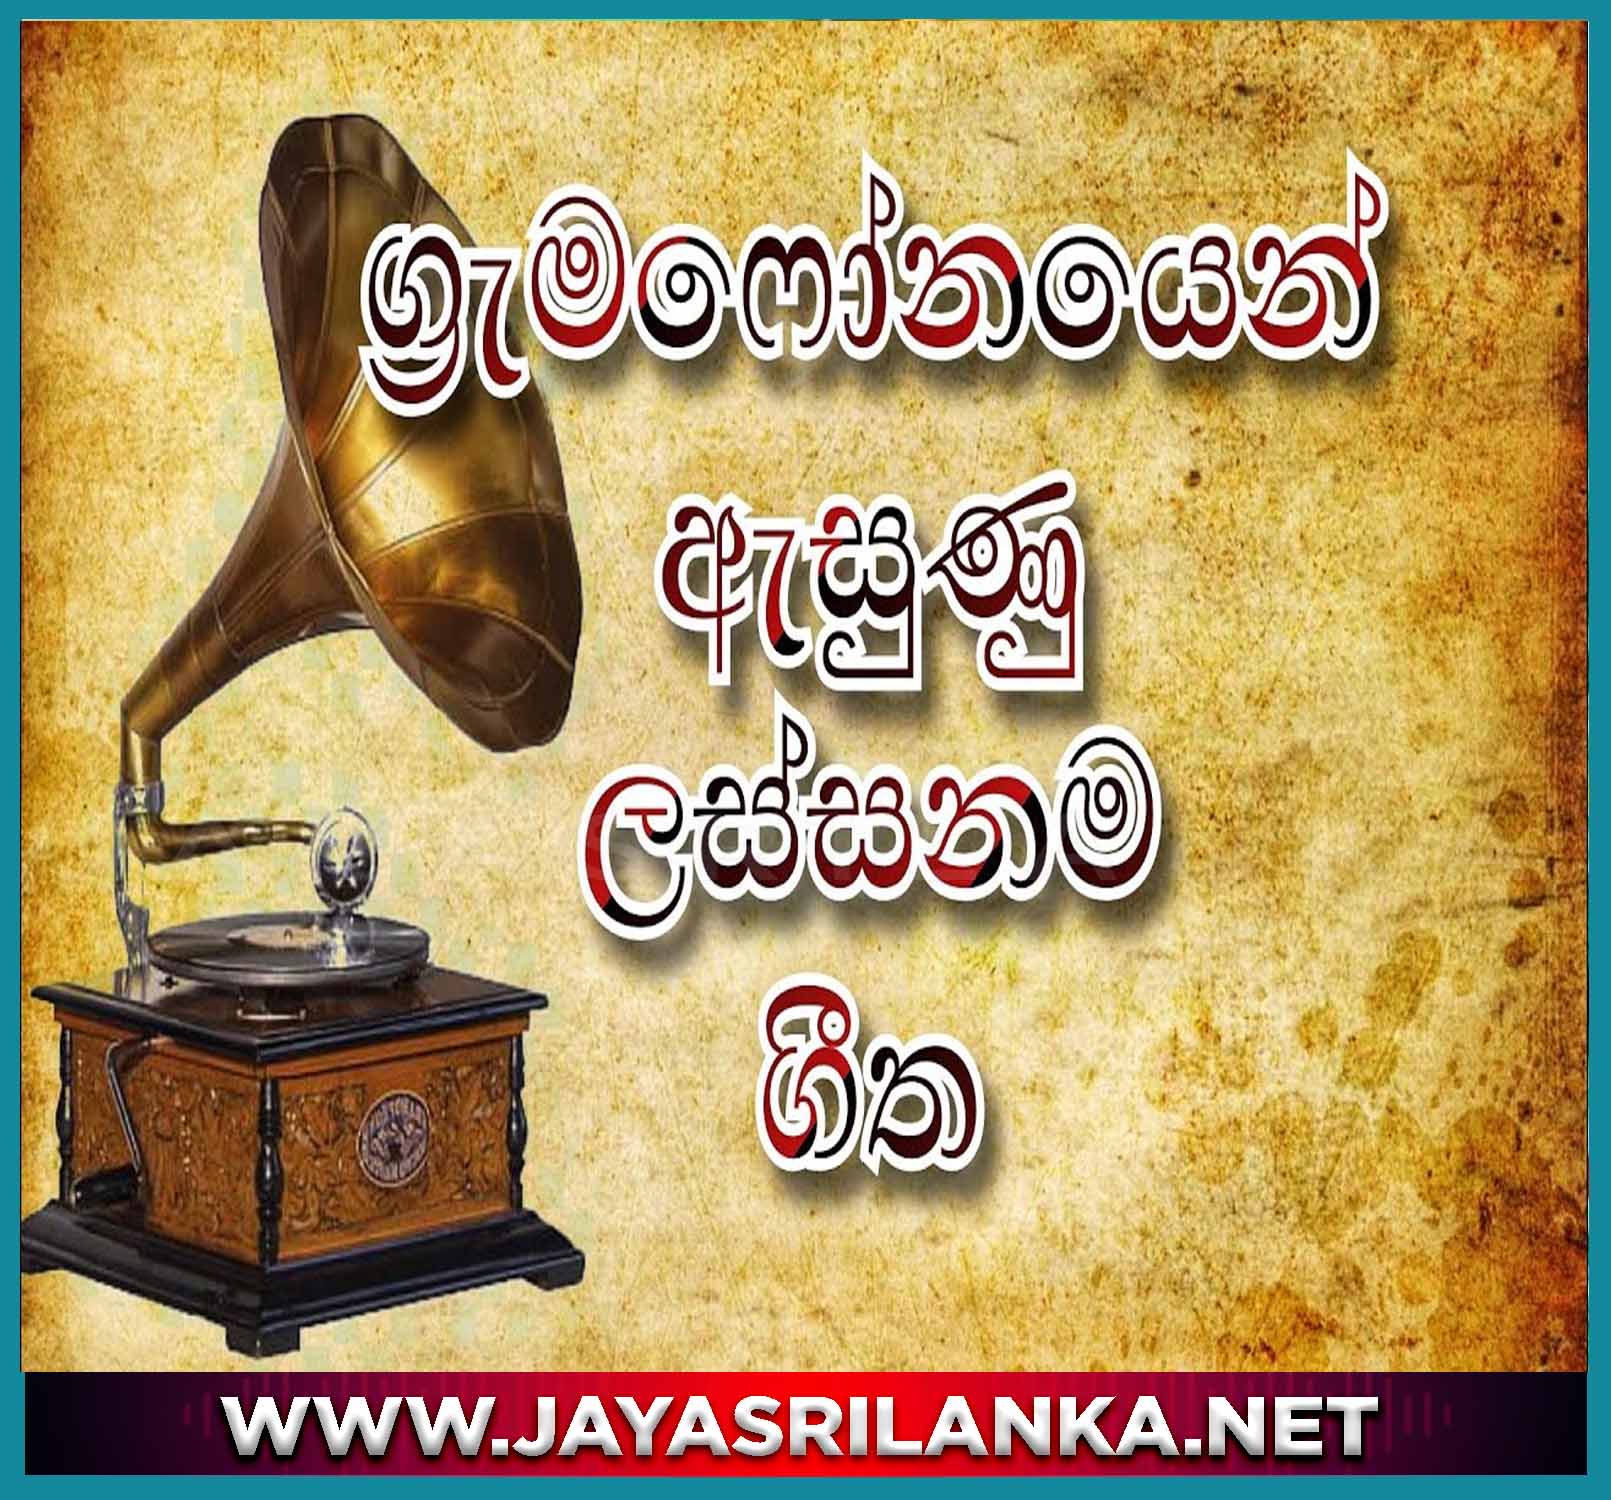 Adara Swami Kema Kannako - Gramophone Songs mp3 Image